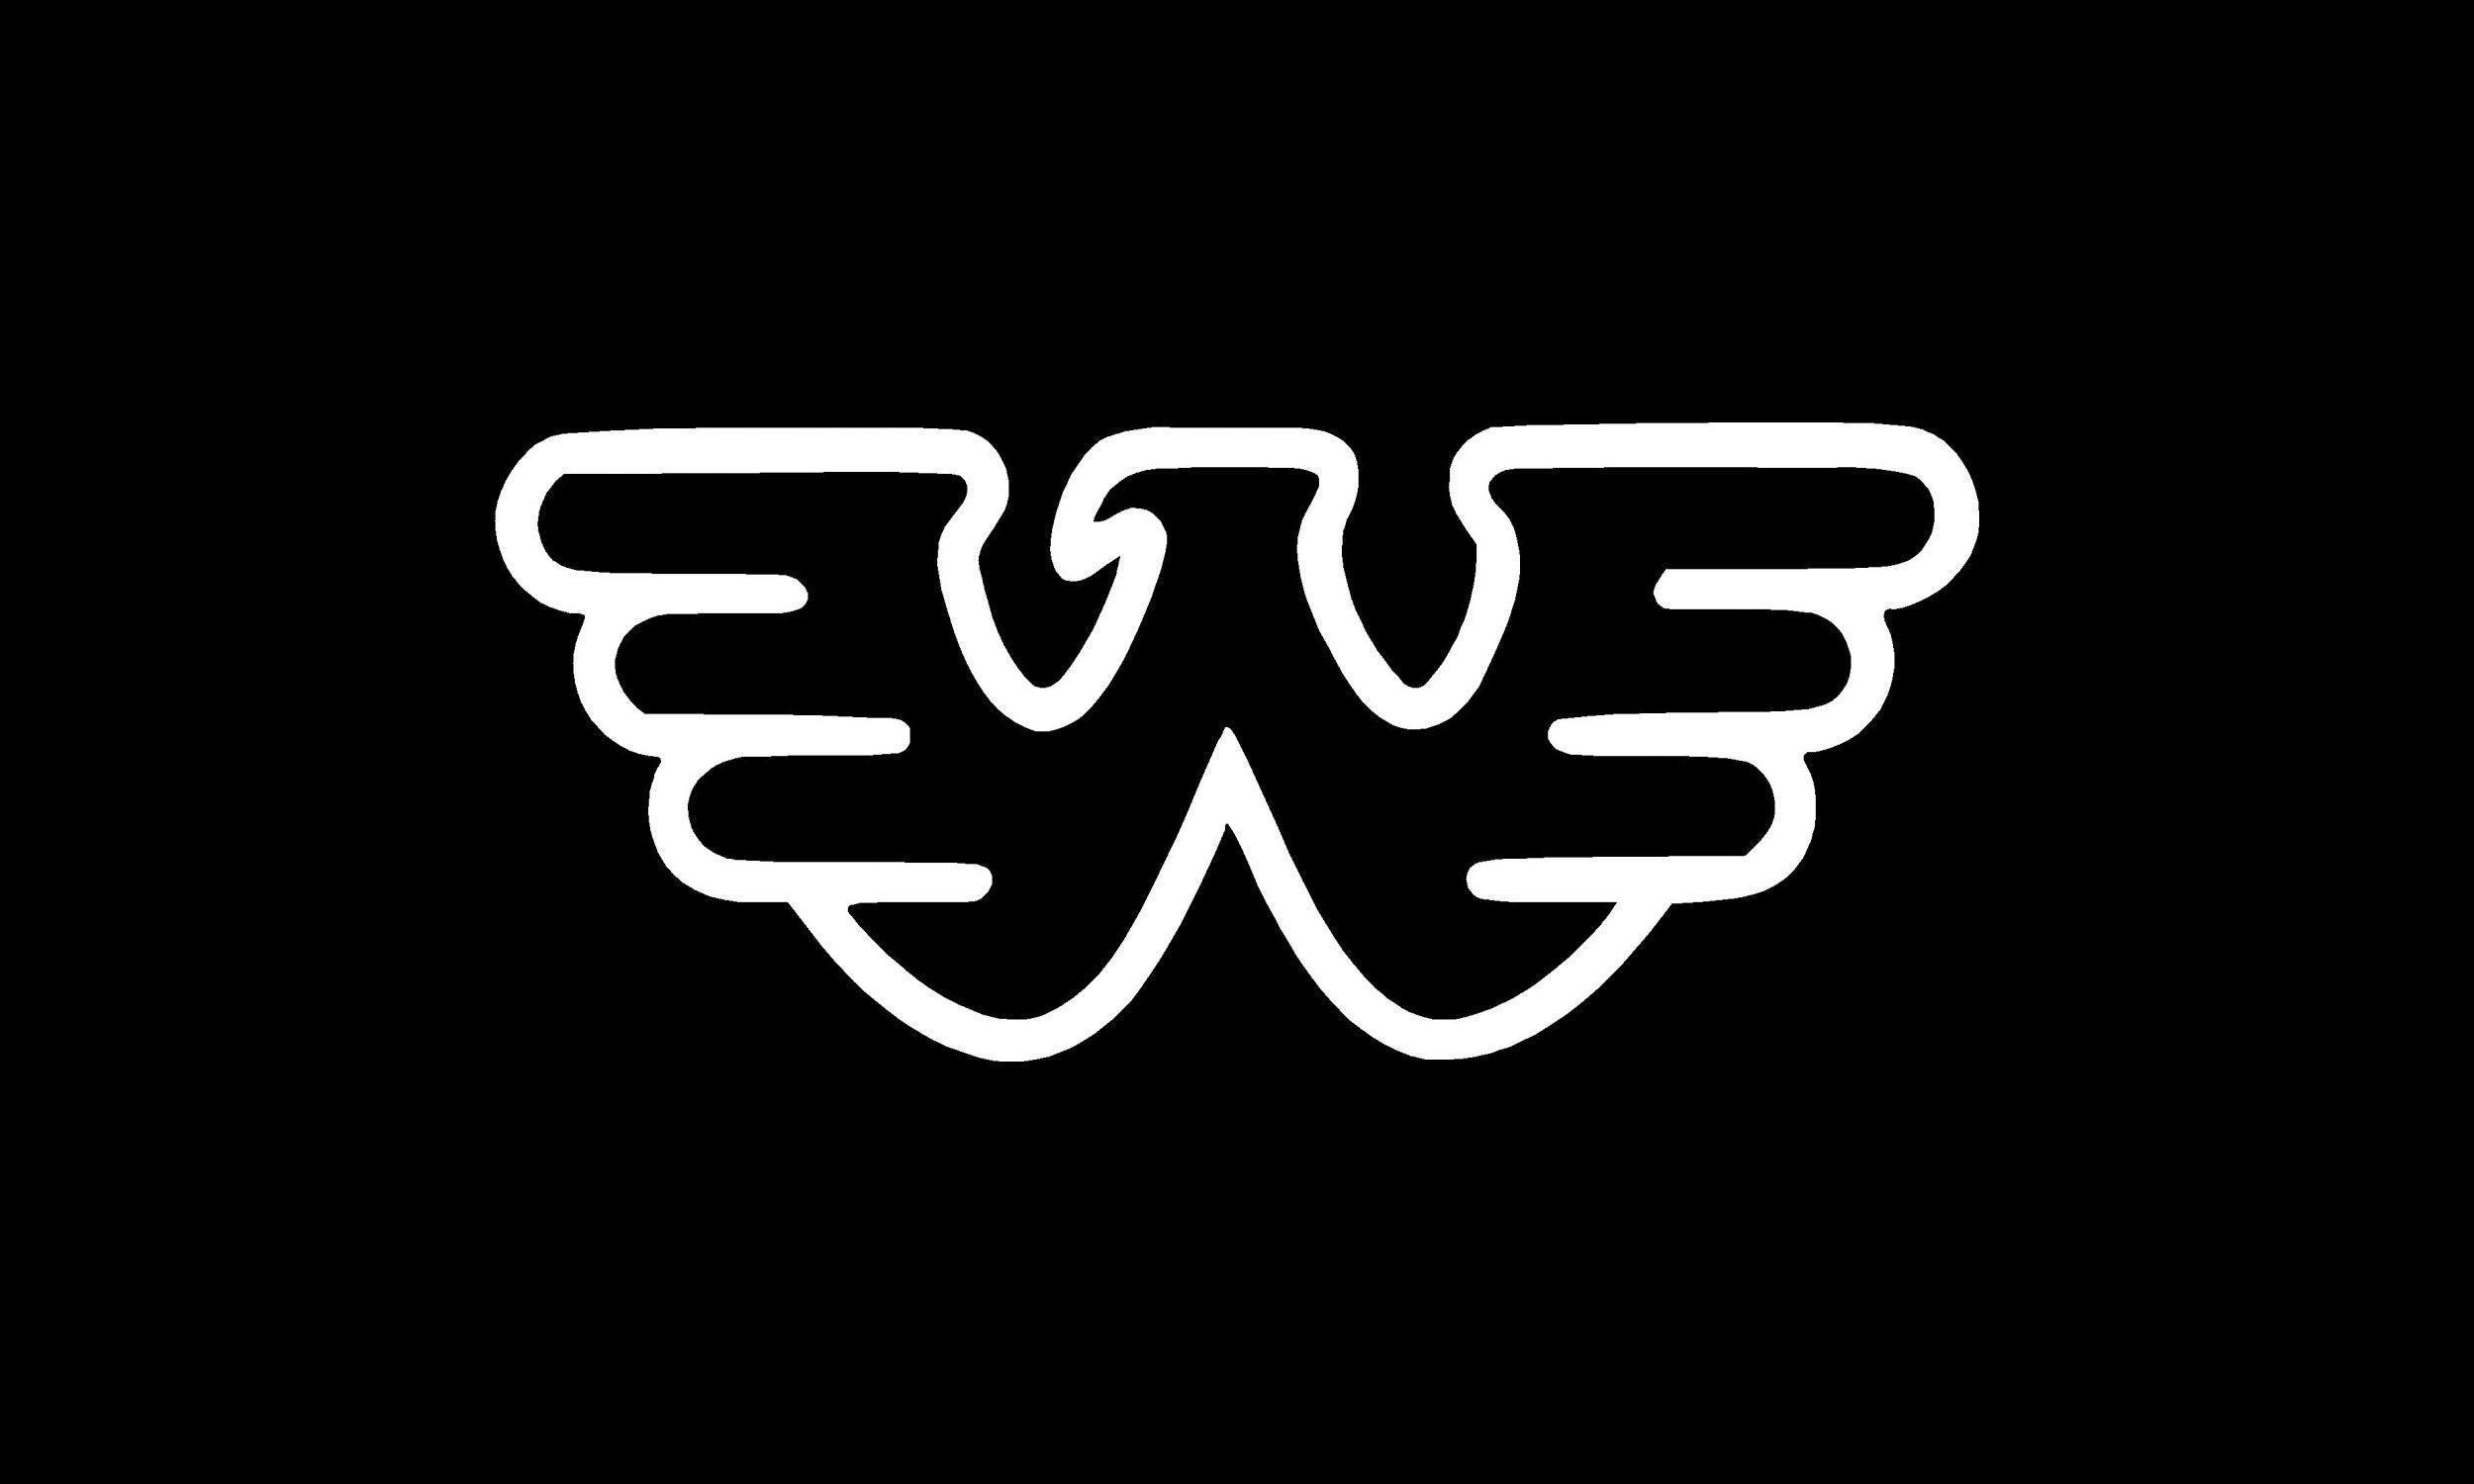 Waylon Jennings Logo - Waylon Jennings / Flying W. Lonesome, On'ry and Mean. Band logos